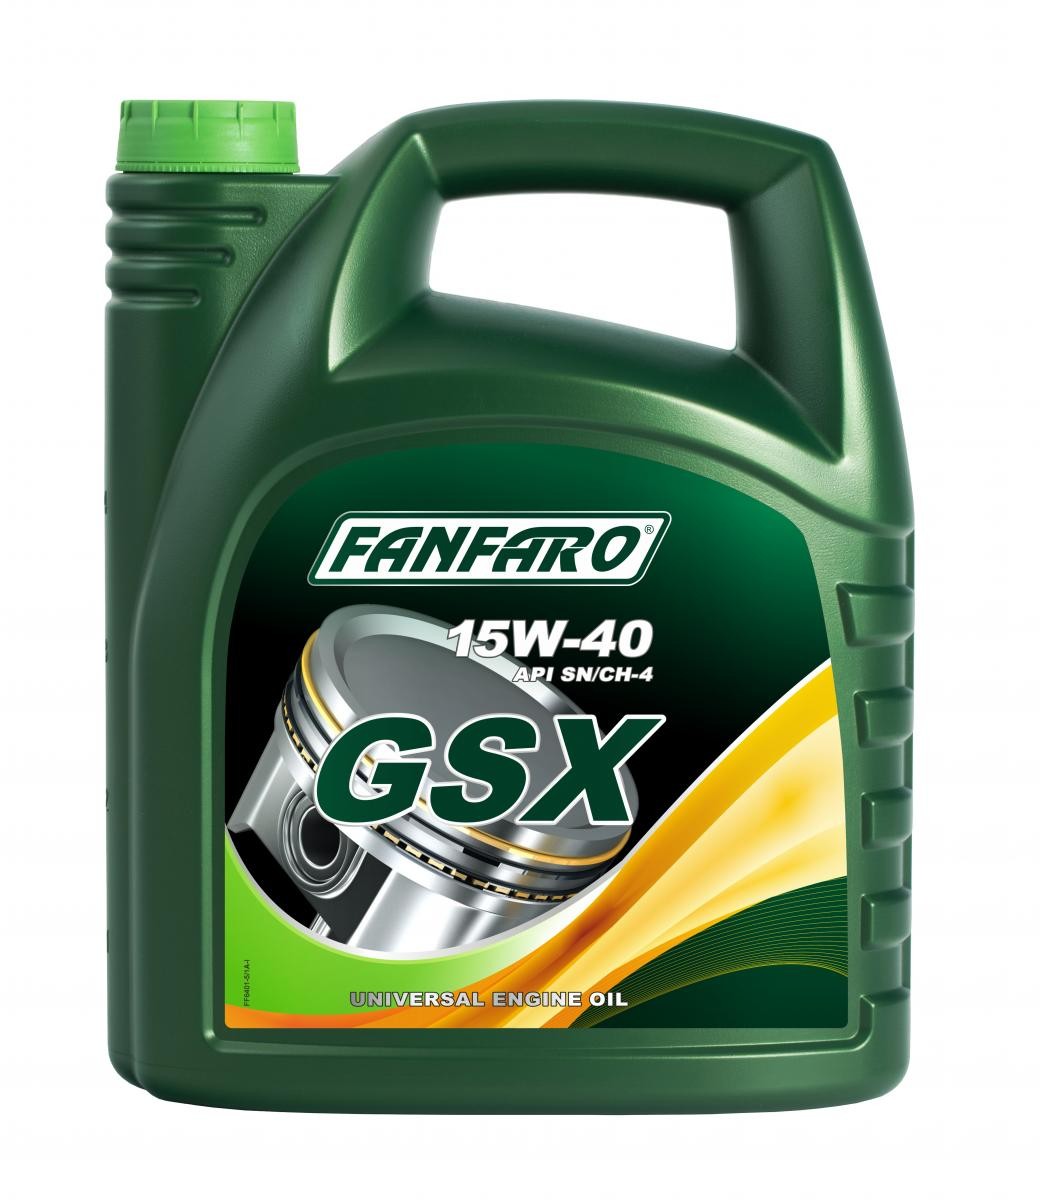 Motoröl FANFARO FF6401-5 mit 21% Rabatt kaufen